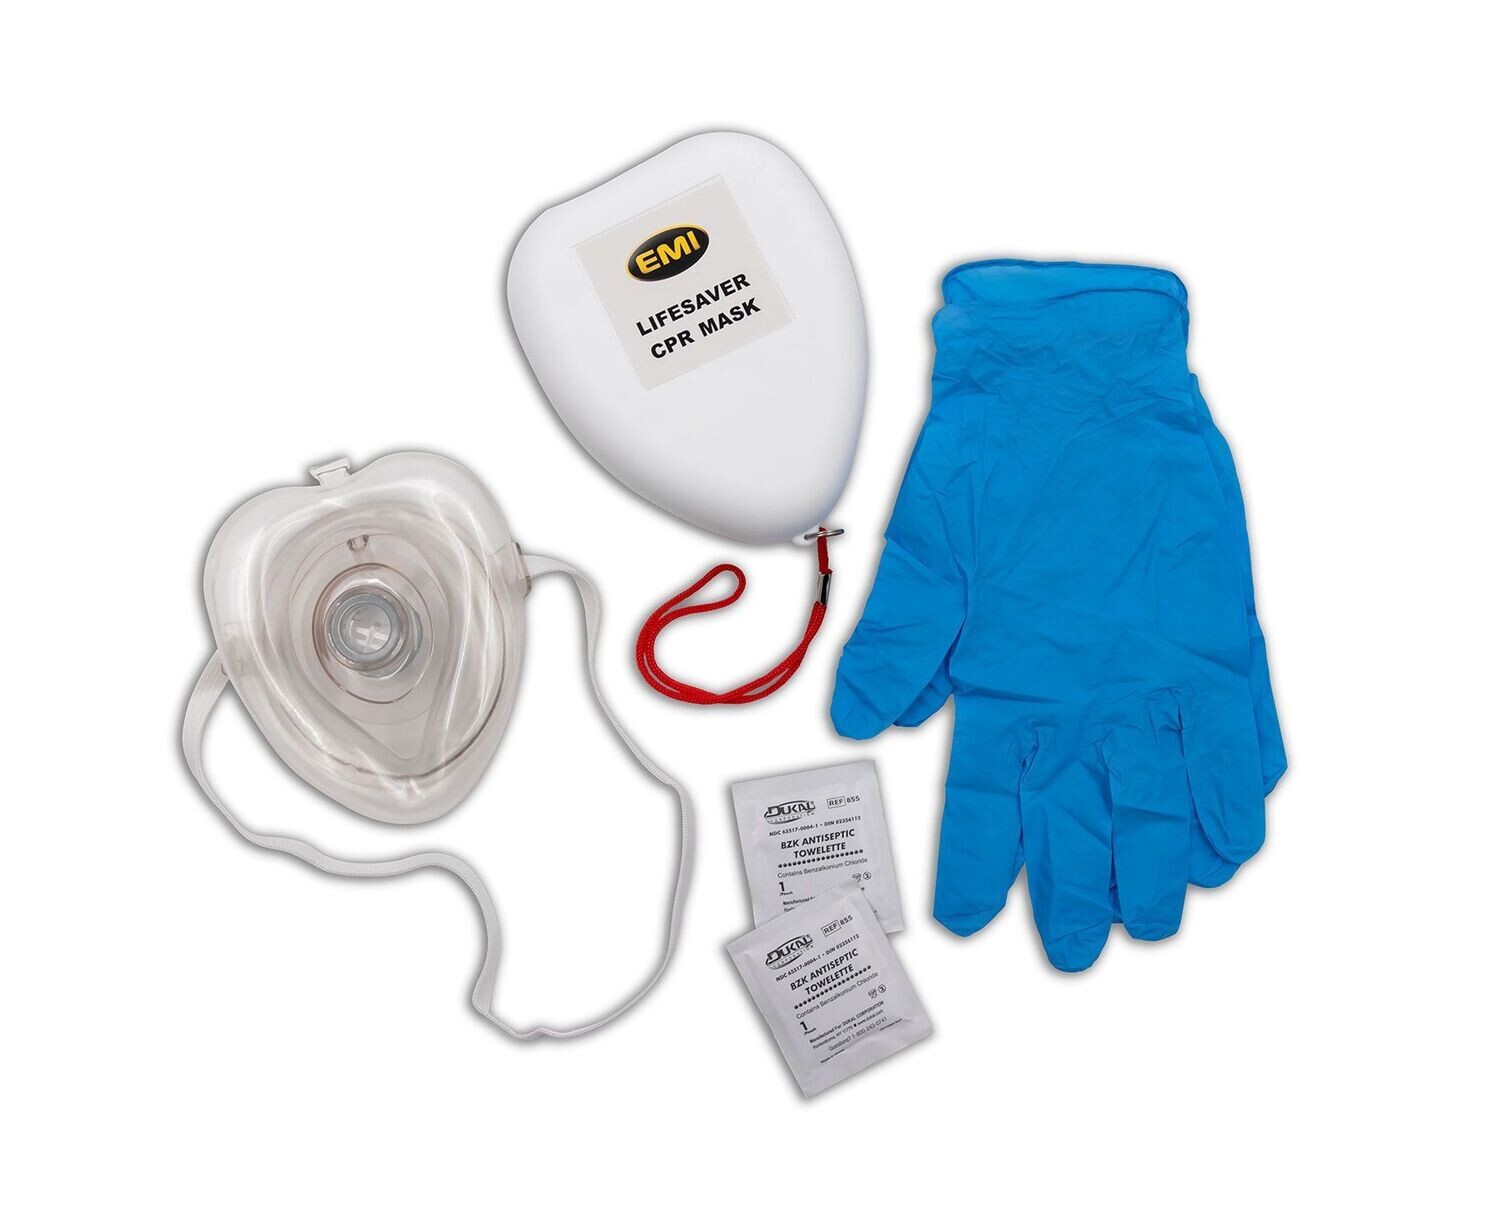 Lifesaver CPR Mask Kit
EMI - Emergency Medical